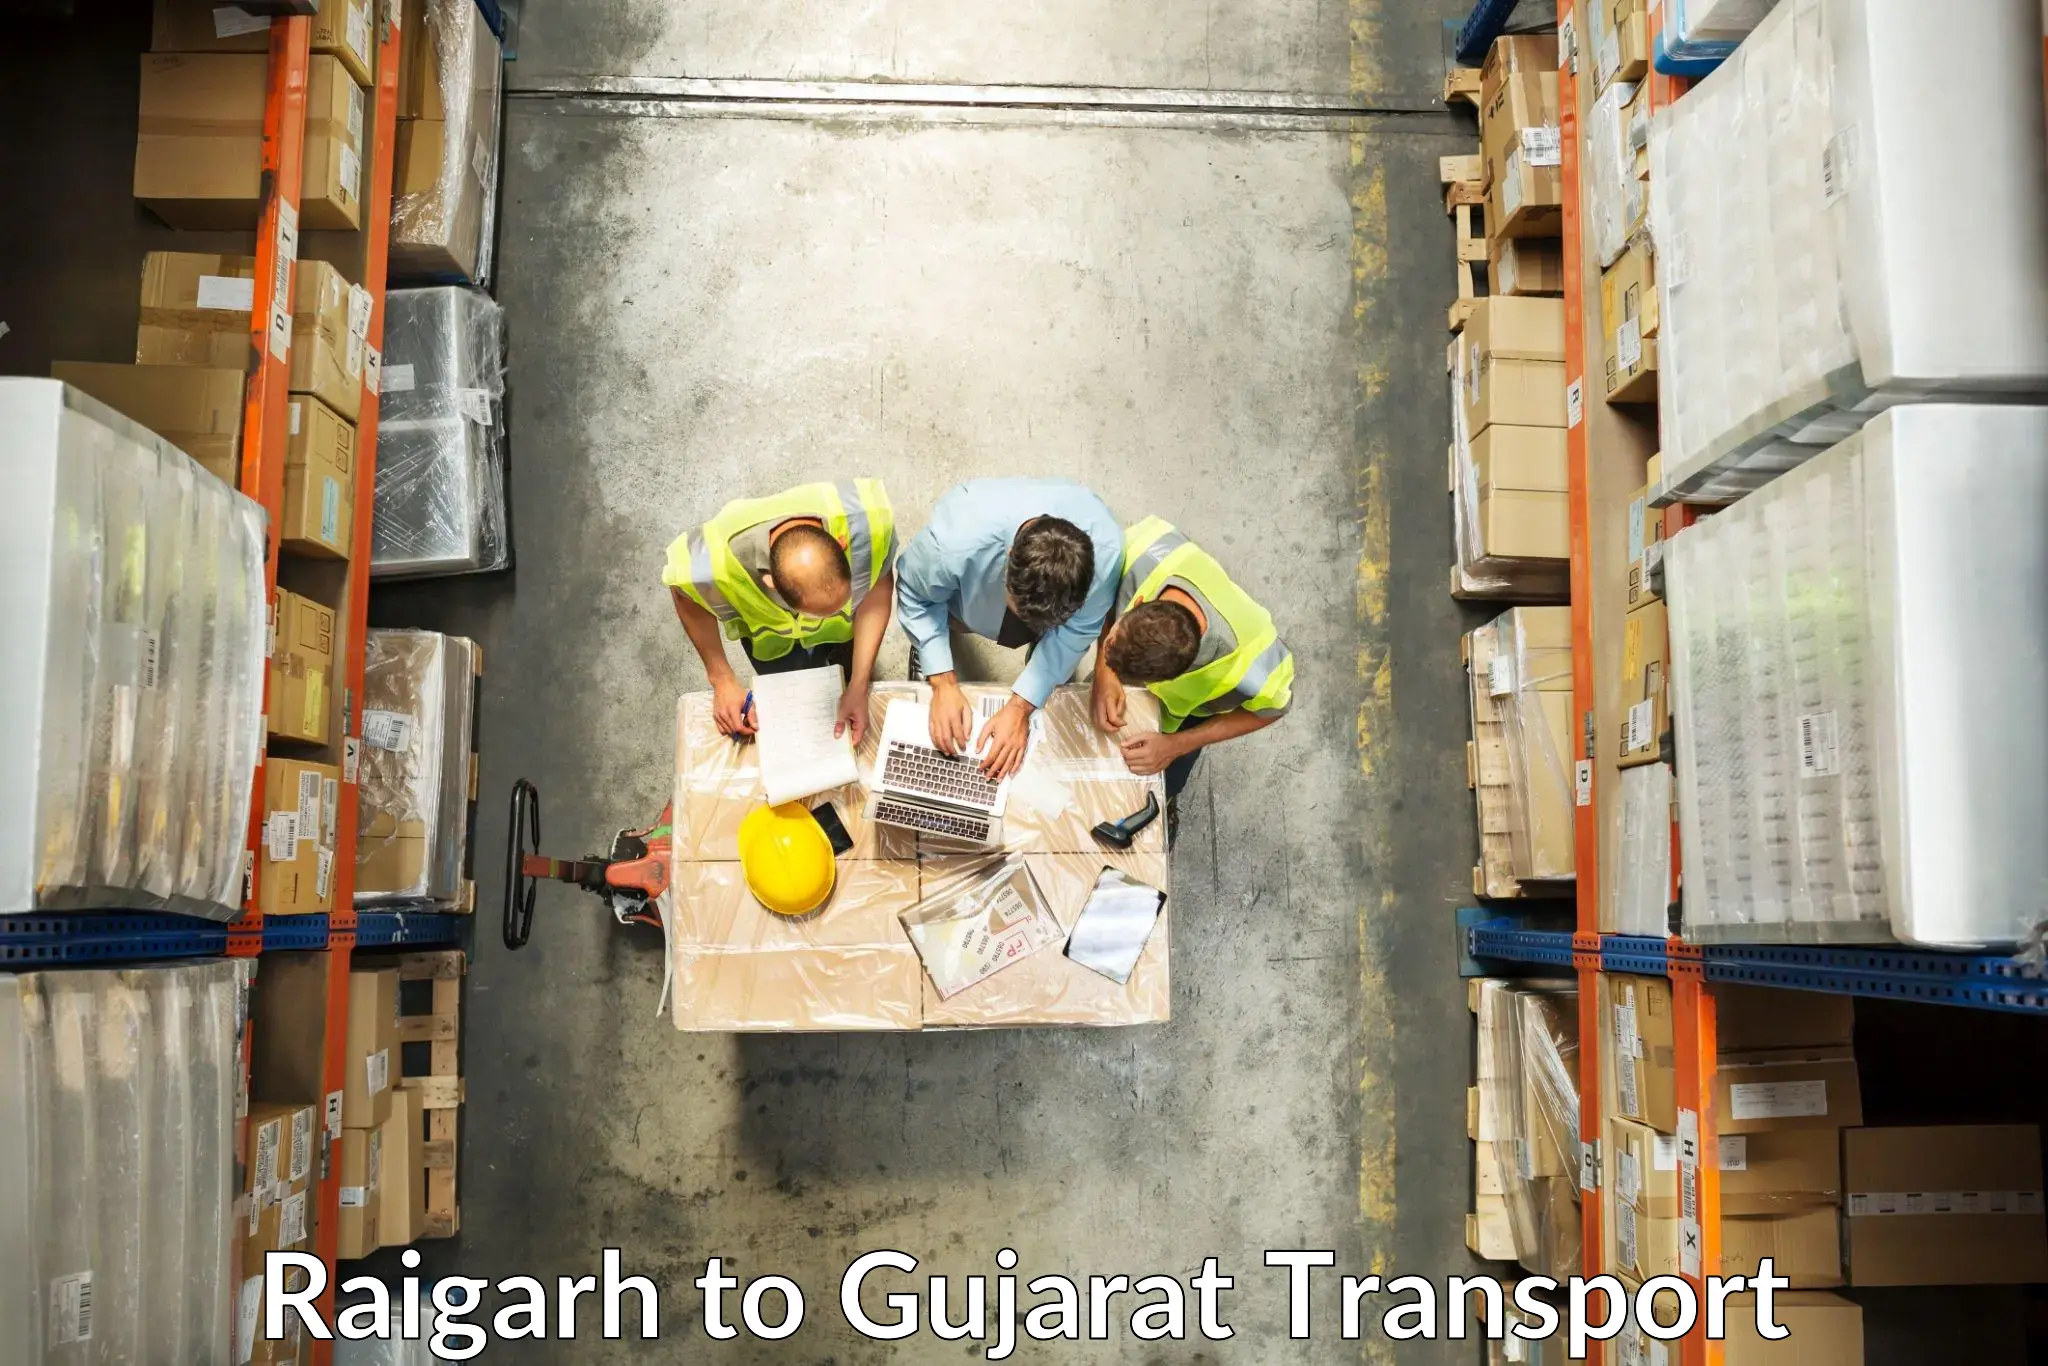 Truck transport companies in India Raigarh to Narmada Gujarat